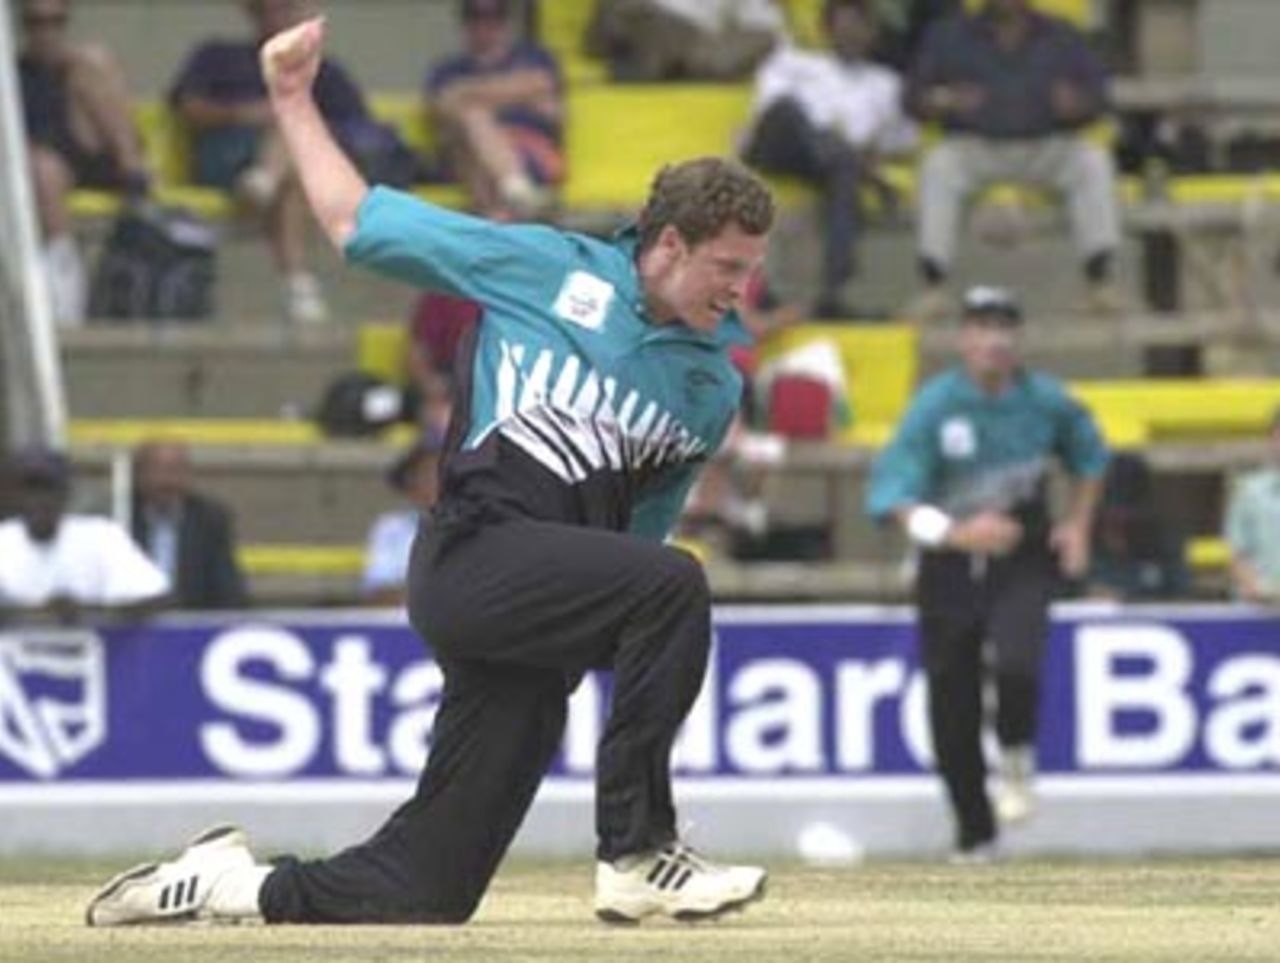 Paul Wiseman celebrates the fall of a Zimbabwean wicket. ICC KnockOut, 2000/01, 3rd Quarter Final, New Zealand v Zimbabwe, Gymkhana Club Ground, Nairobi,09 October 2000